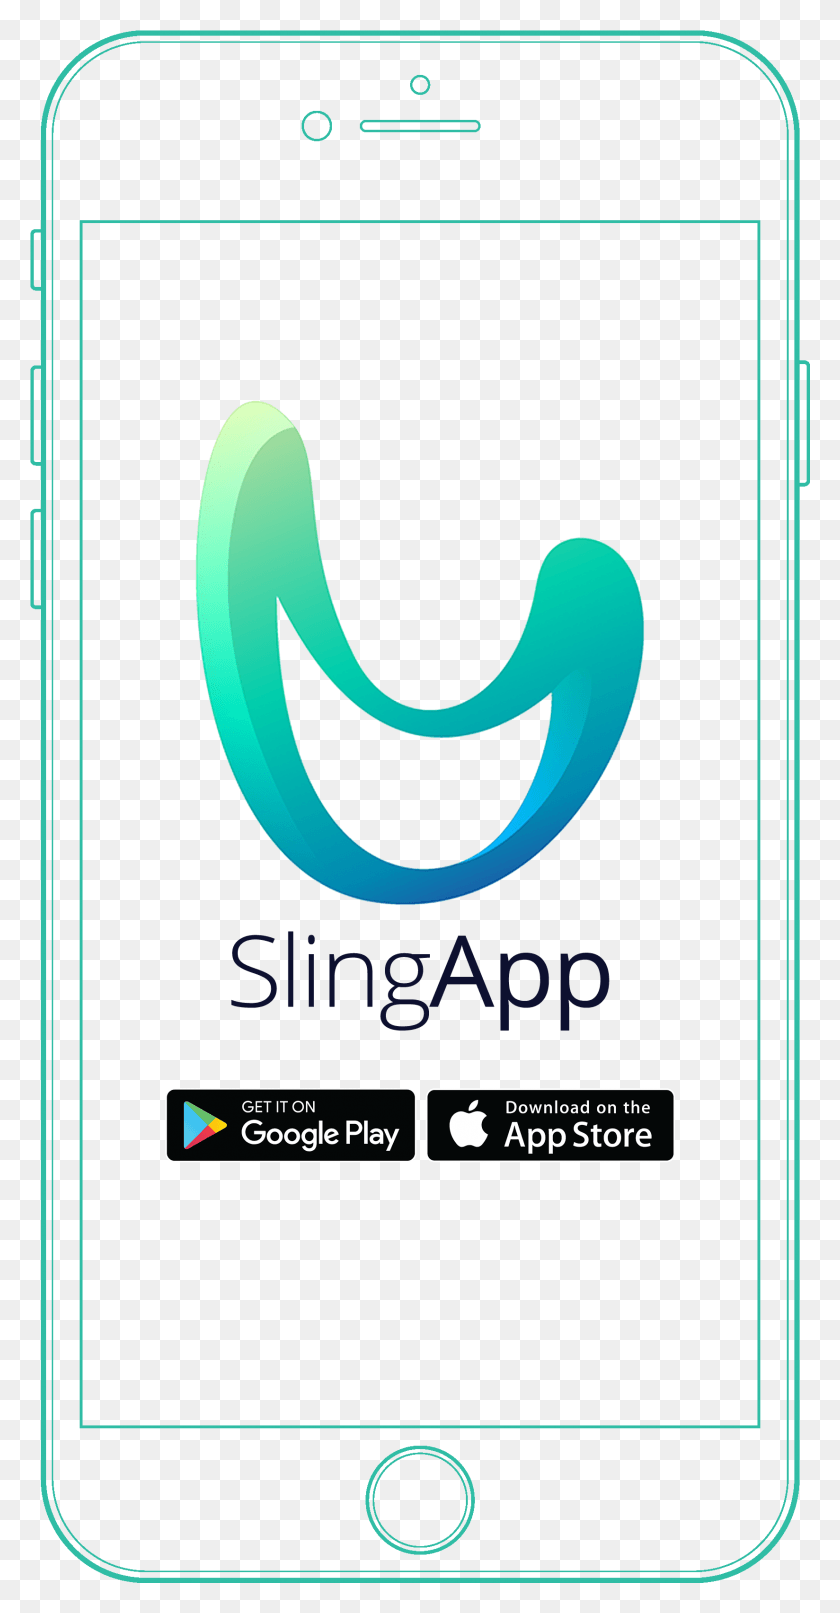 1648x3282 Slingapp На Ios Android App Store, Этикетка, Текст, Реклама Hd Png Скачать